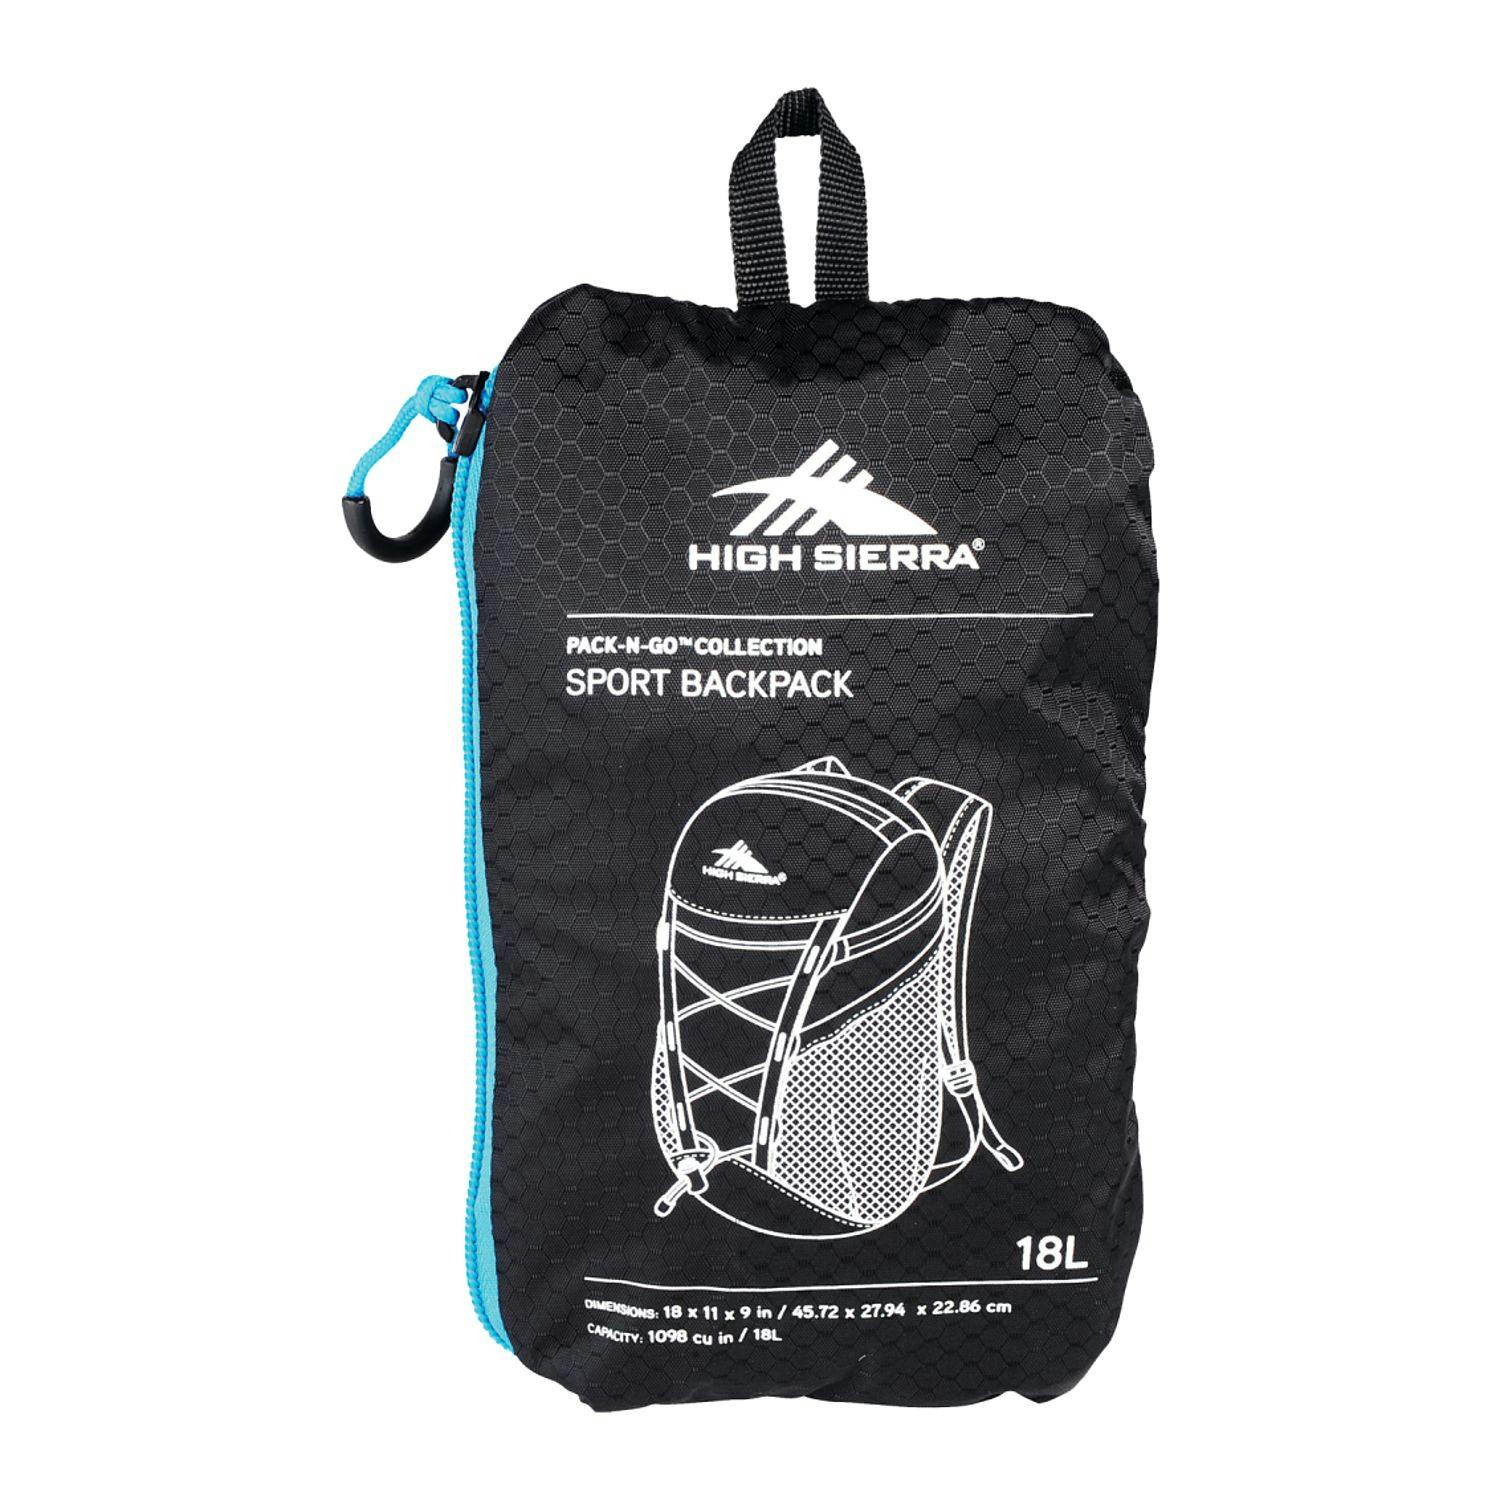 High Sierra Pack-n-Go Backpack - additional Image 5